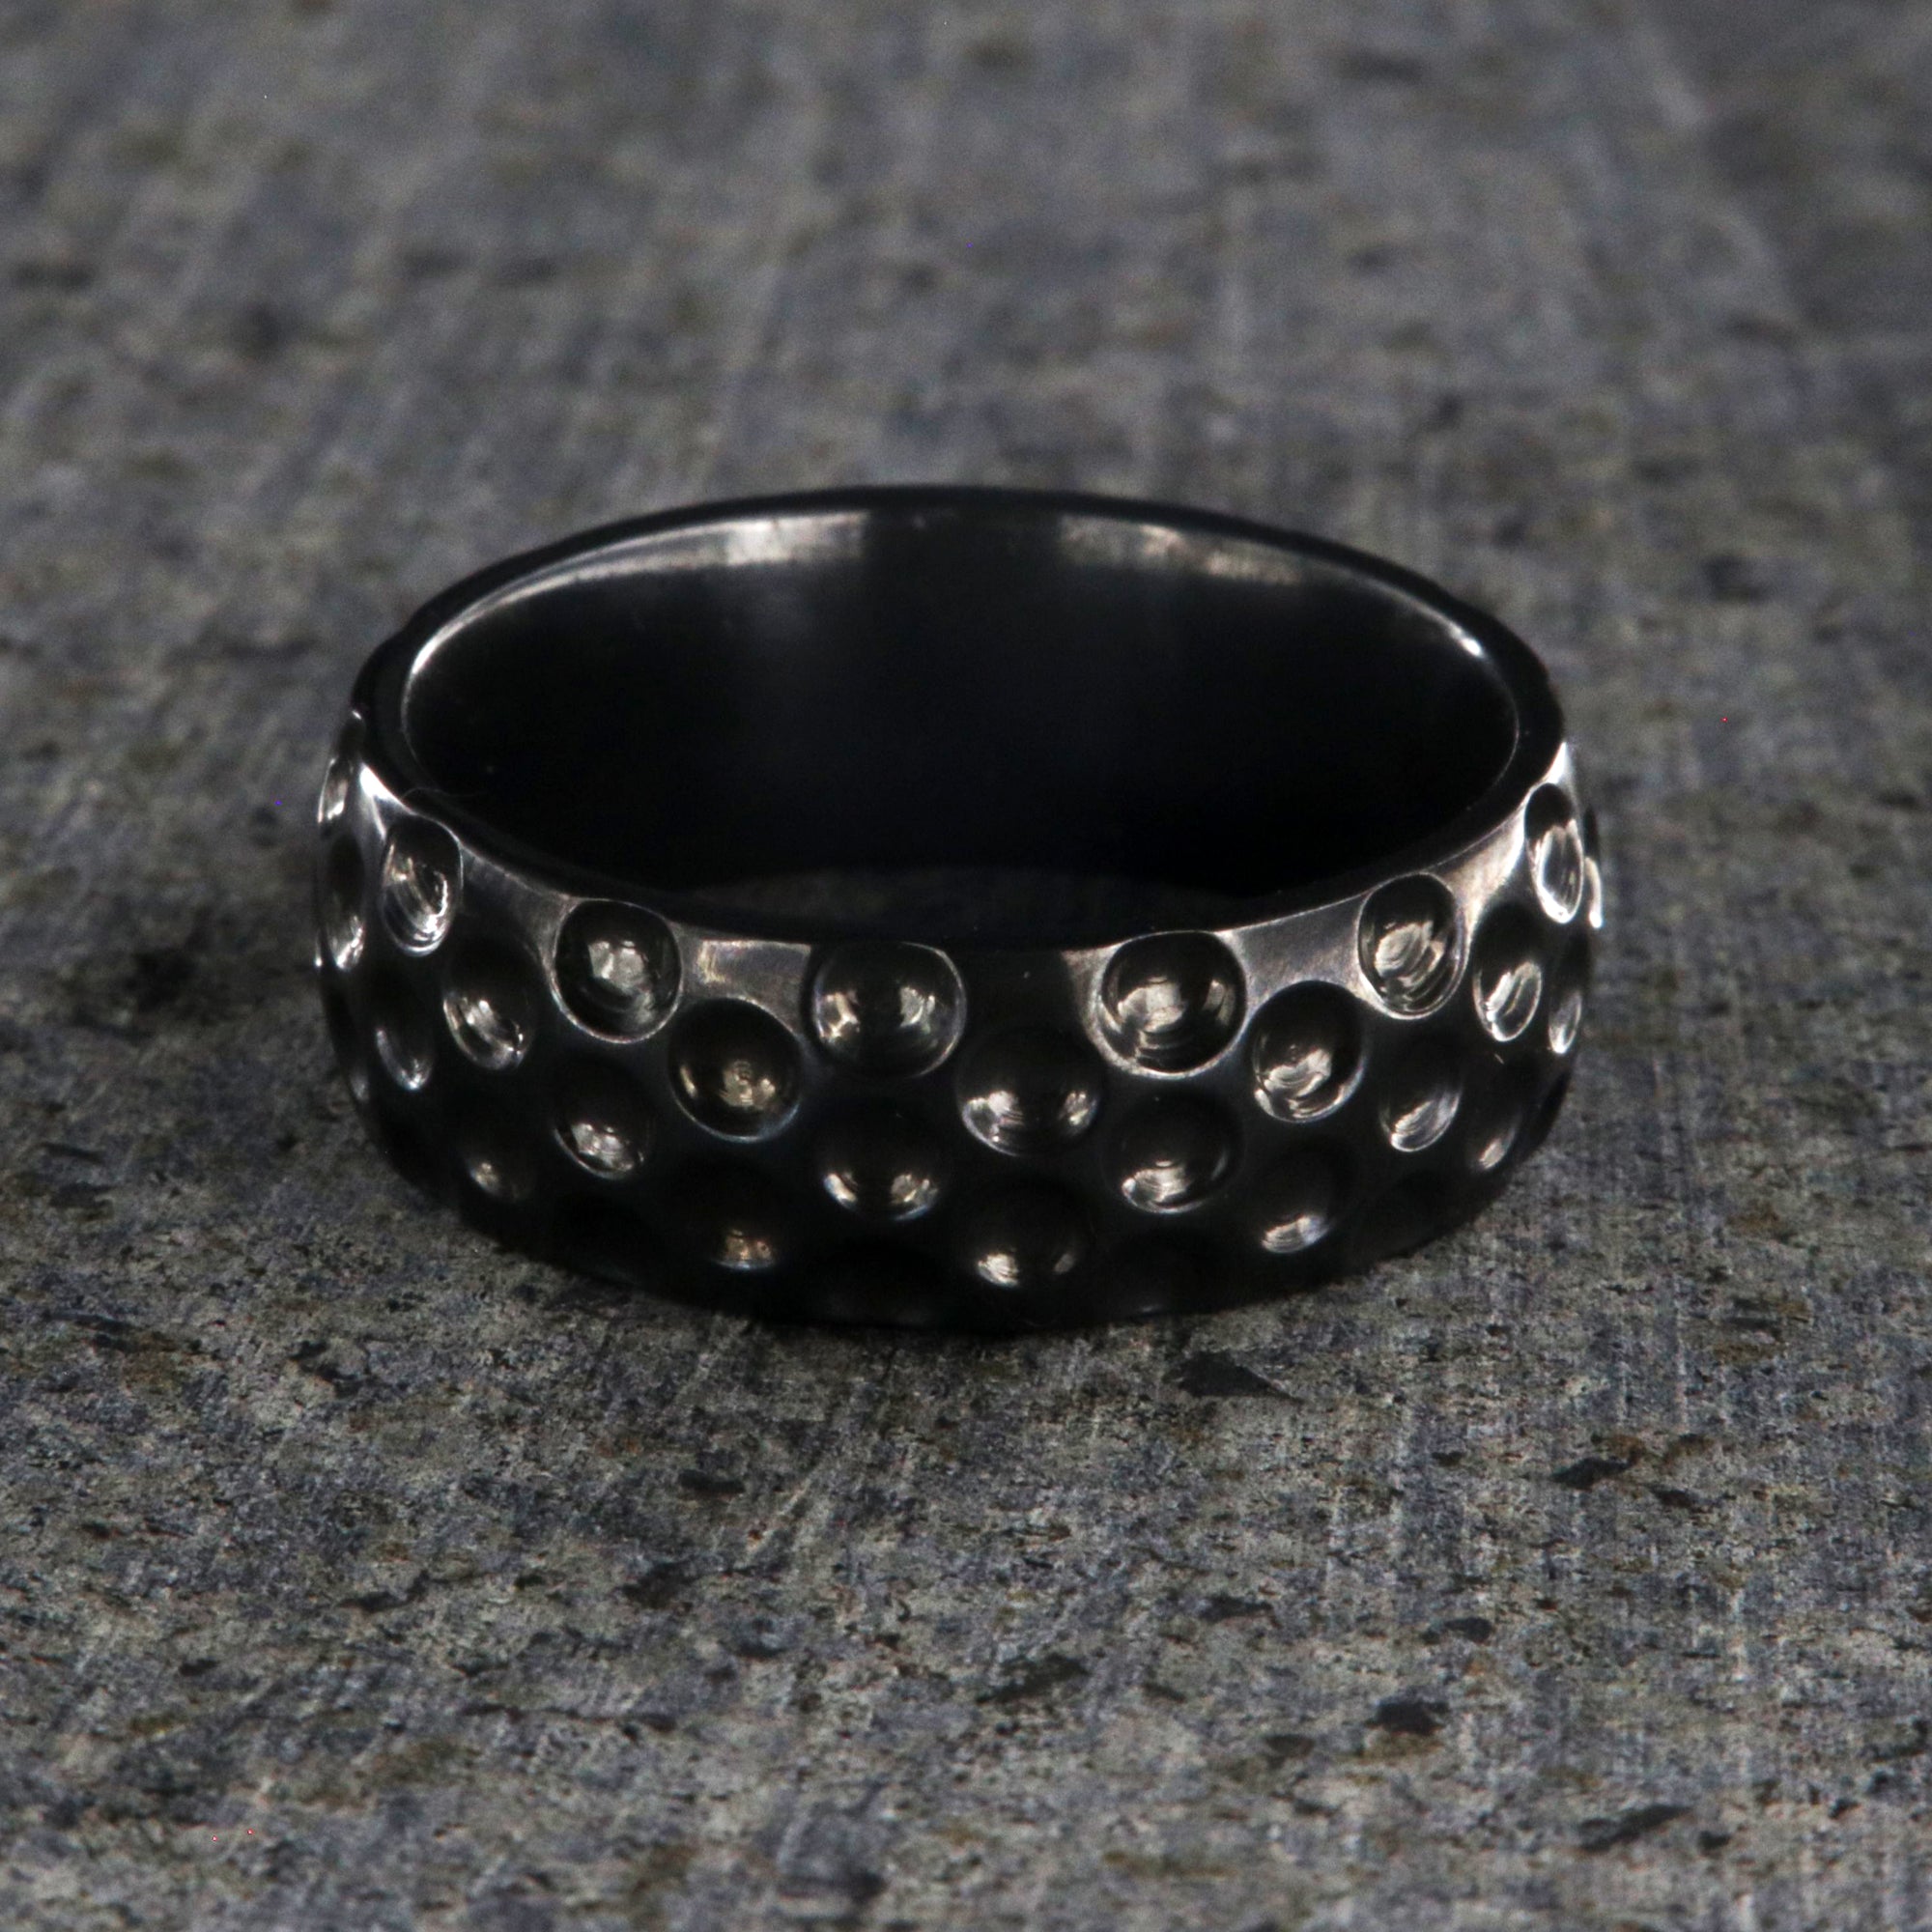 8mm wide black zirconium golf ball ring